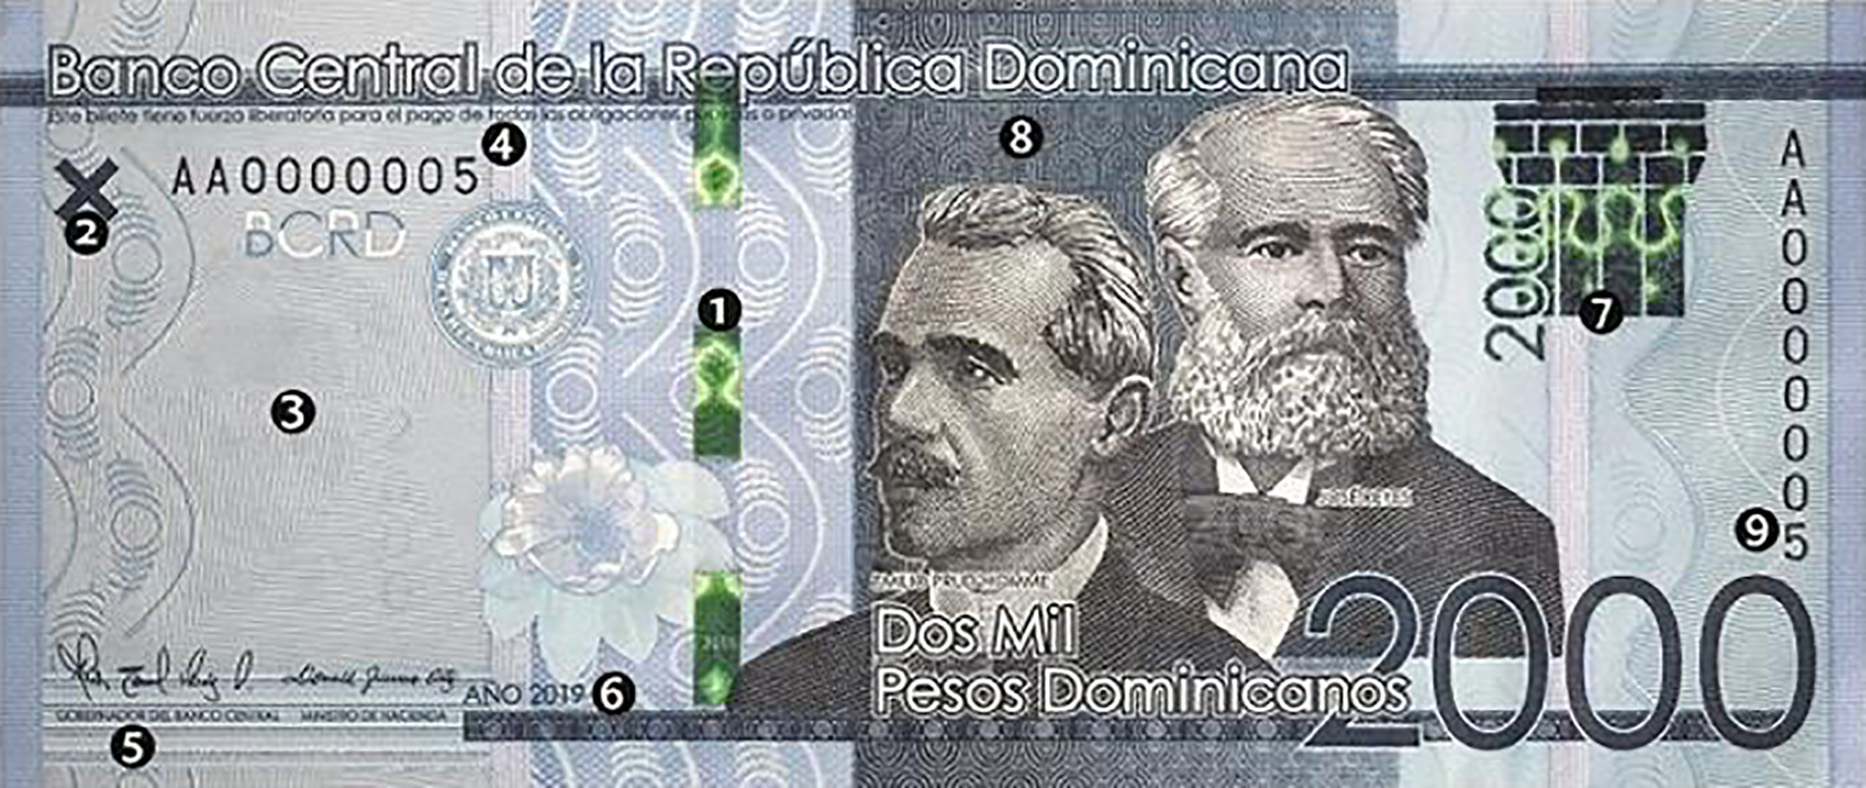 Dominican Republic new 2,000-peso dominicano note reportedly introduced